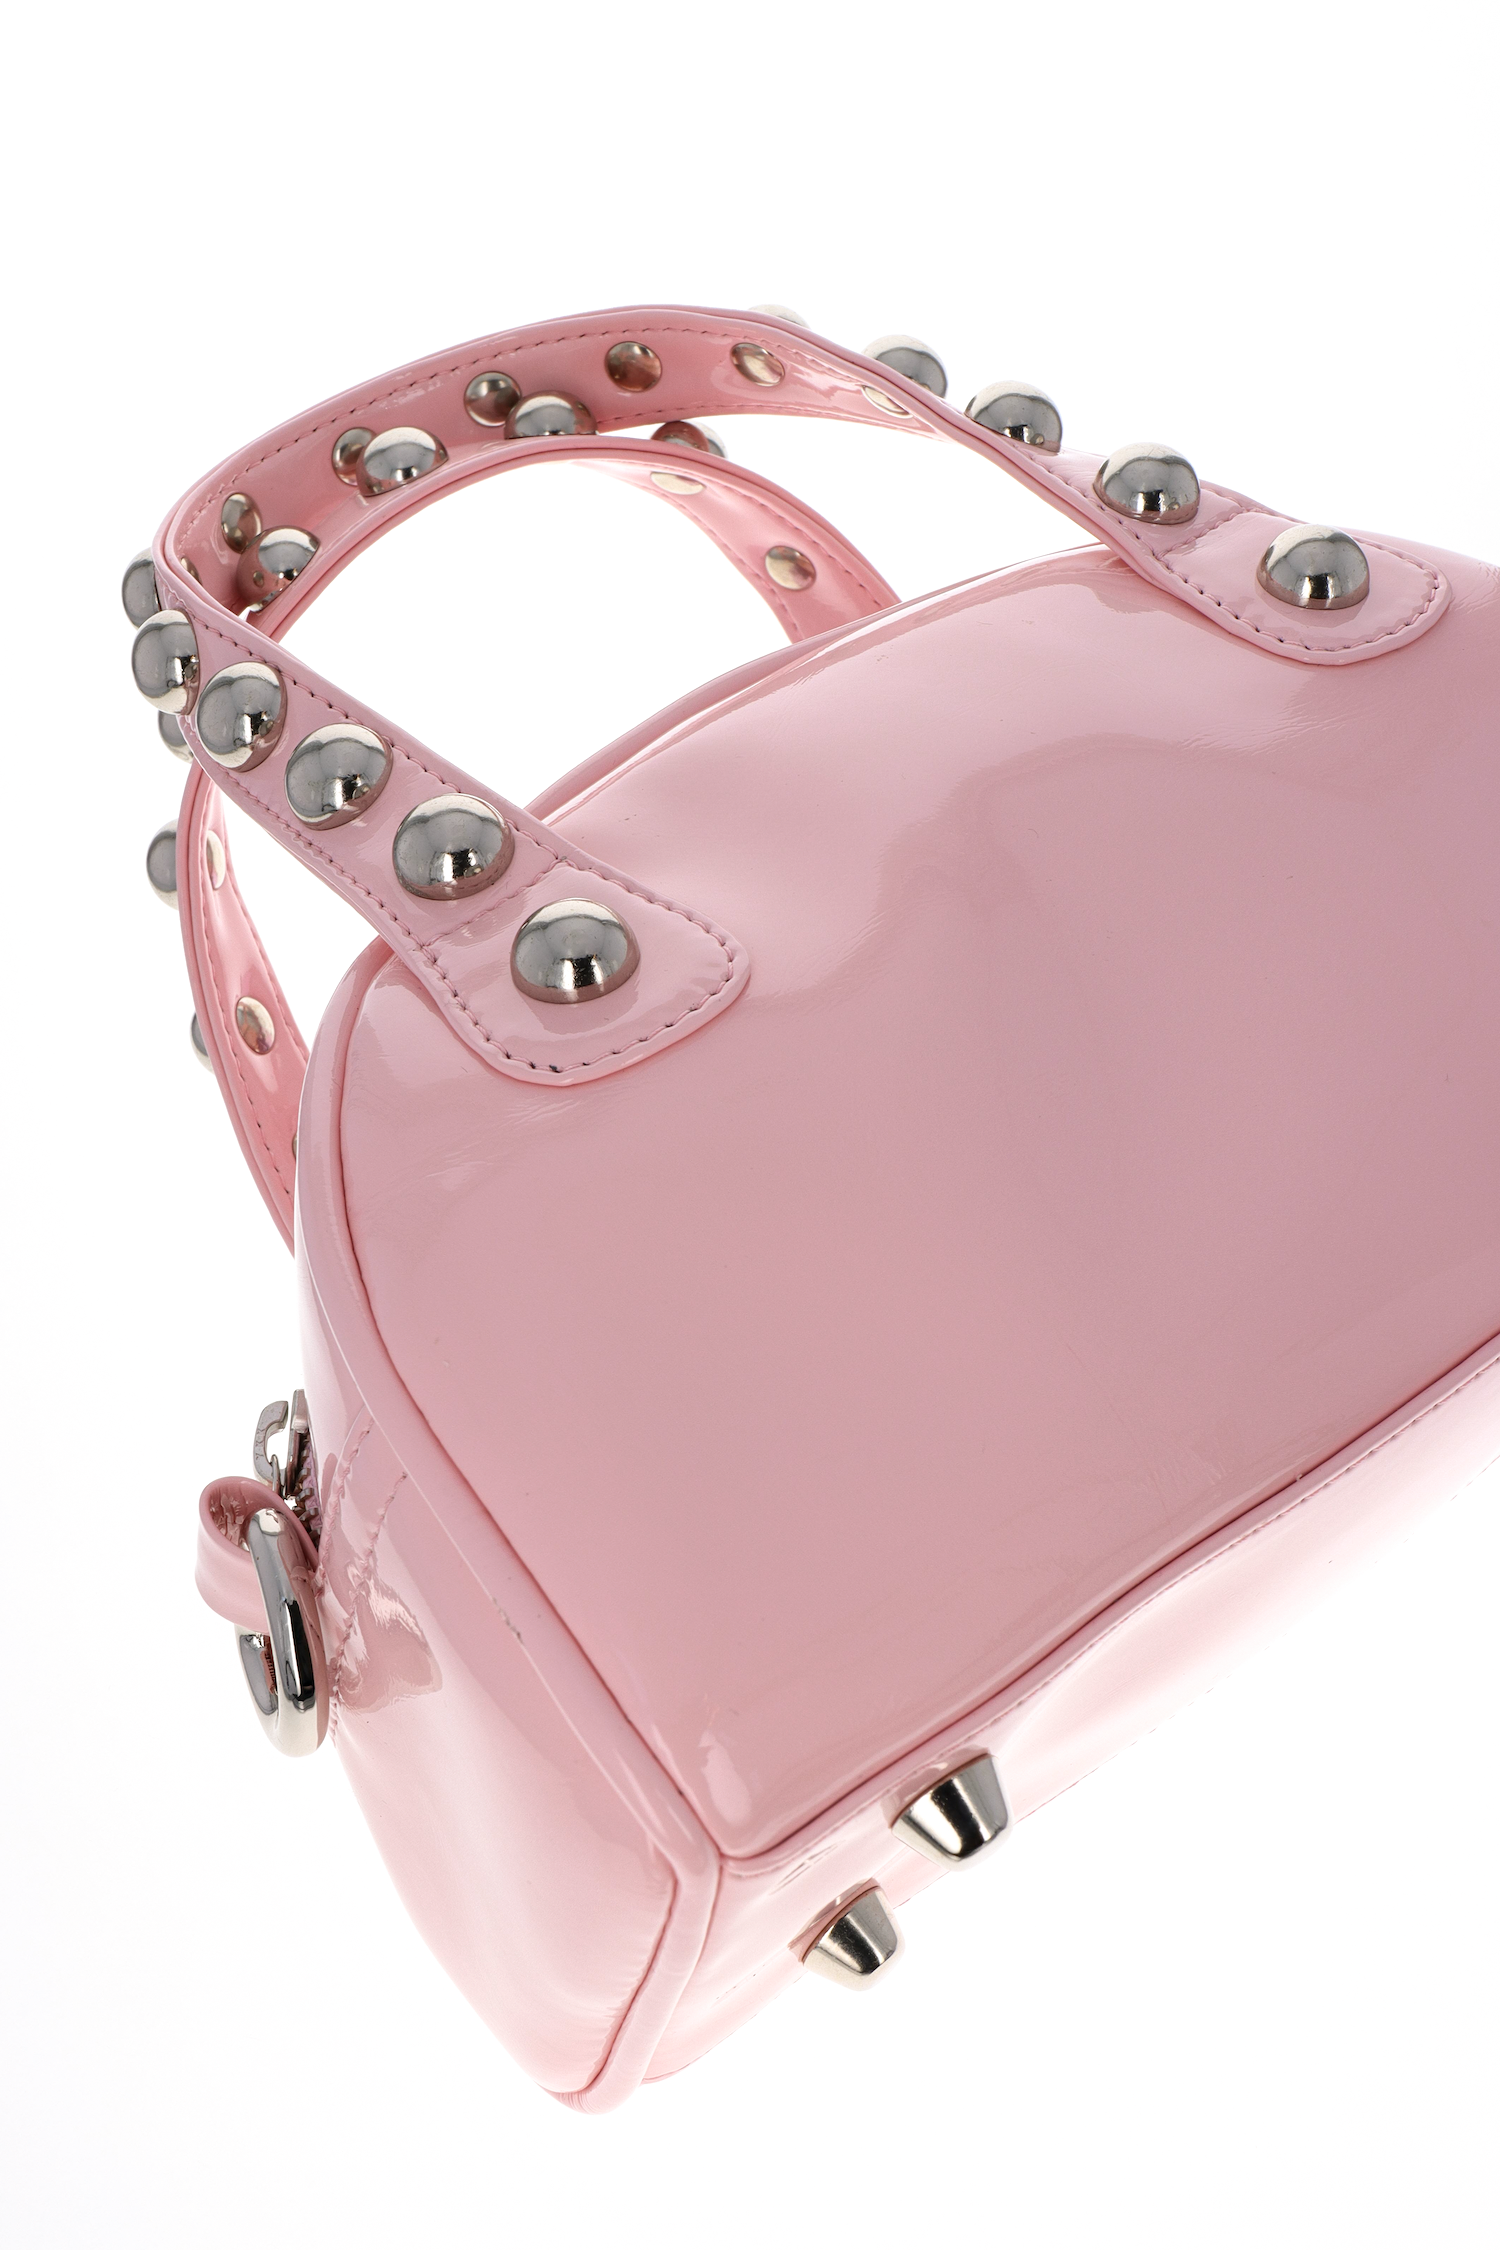 Liv pink patent bag